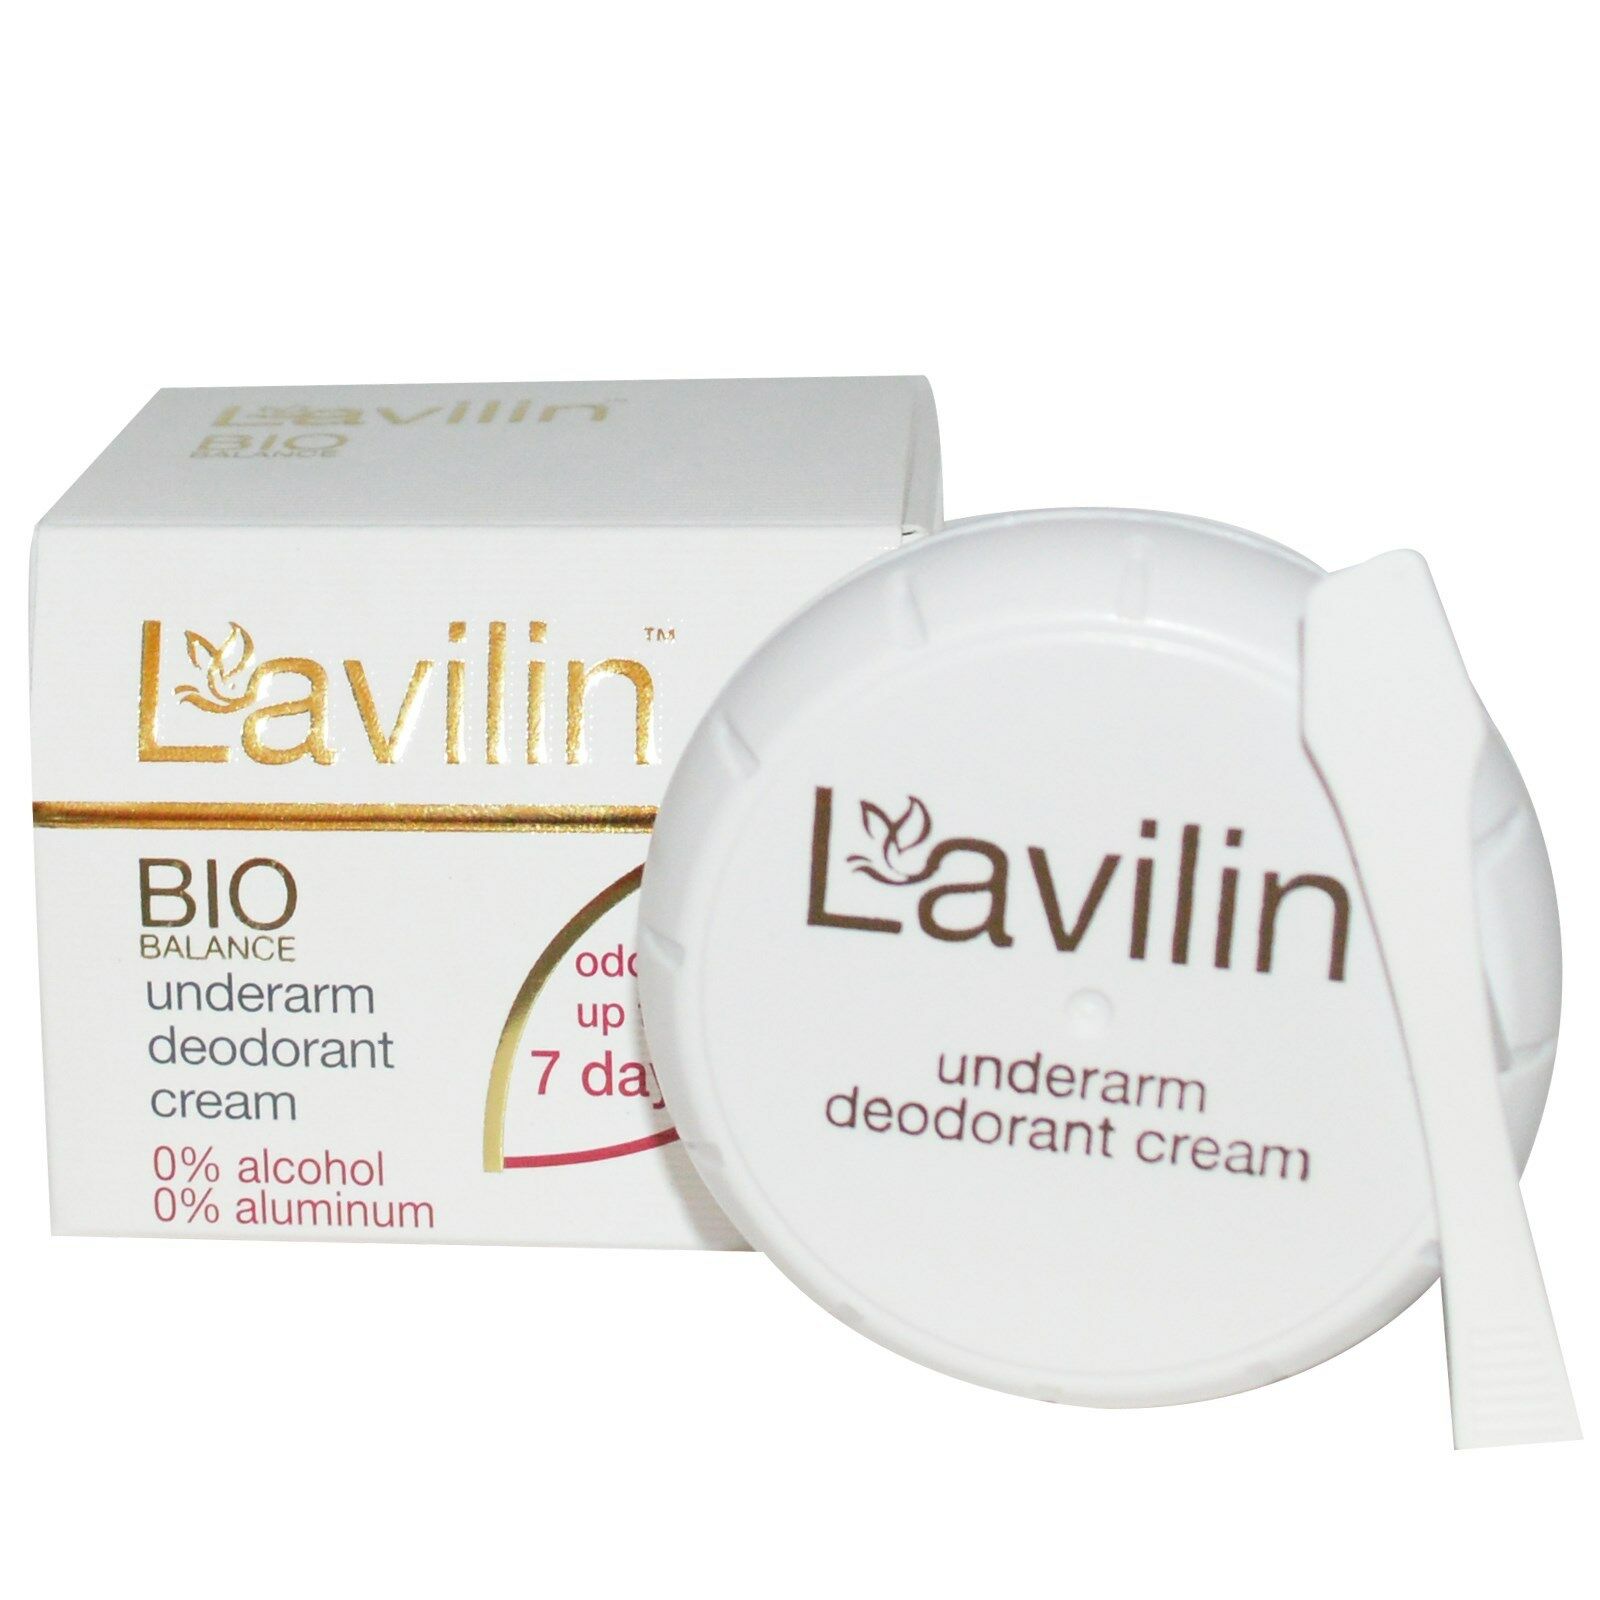 Hlavin Hlavilin Lavilin Bio Balance Underarm Deodorant Cream